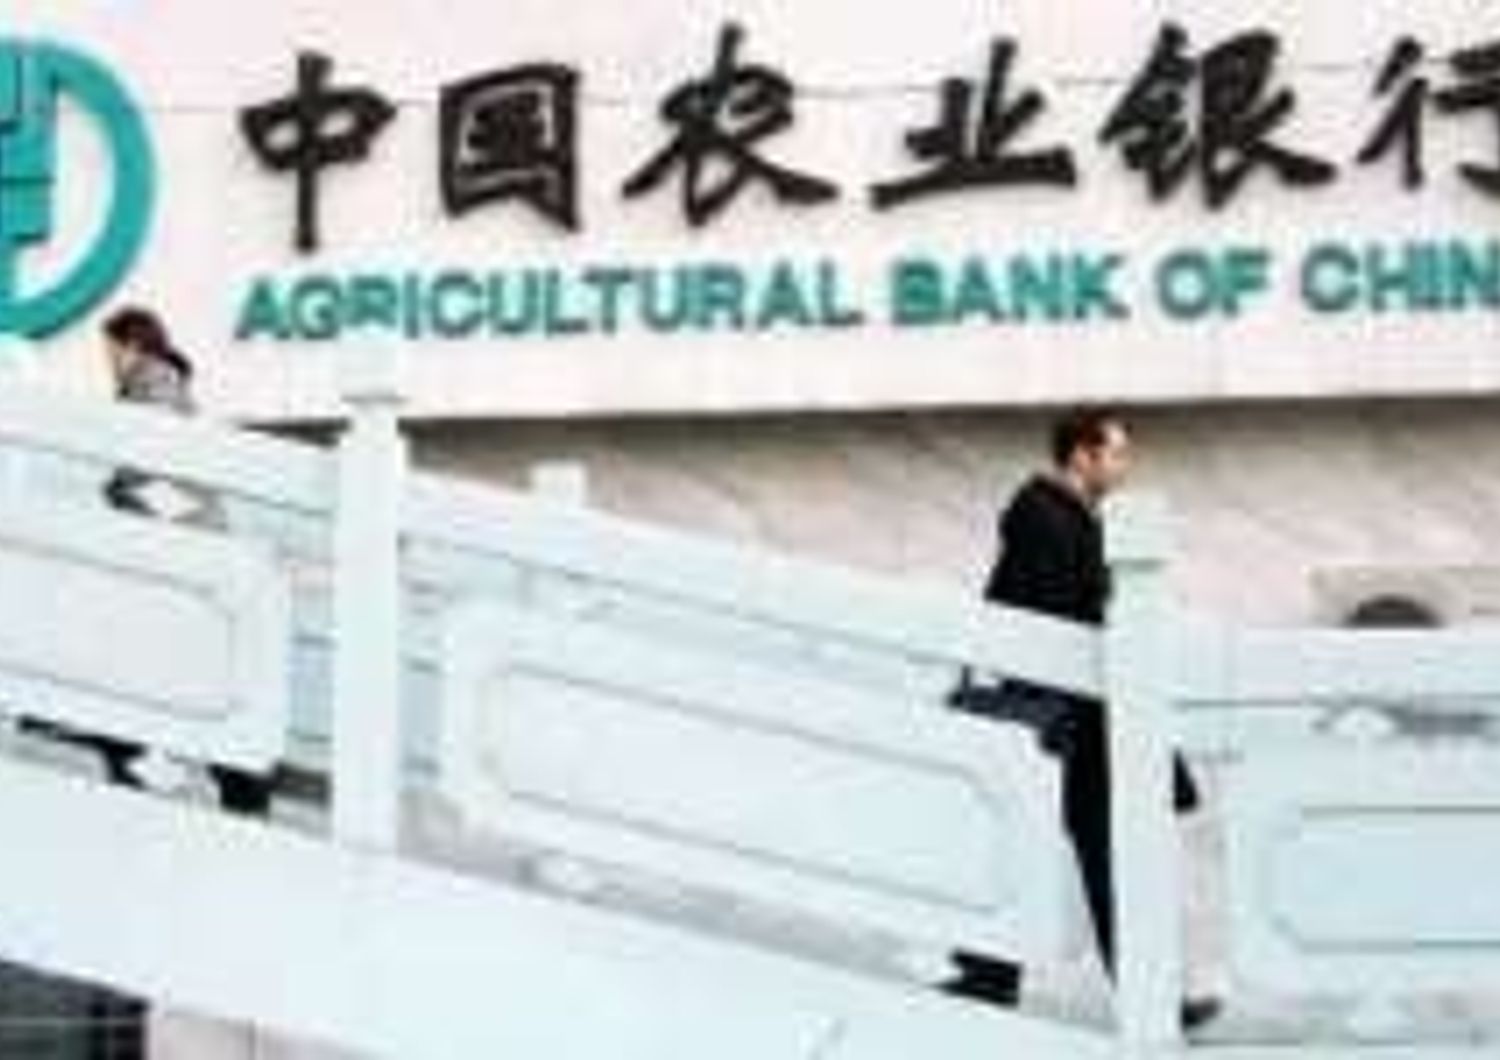 AGRICULTURAL BANK OF CHINA VERSO L'IPO